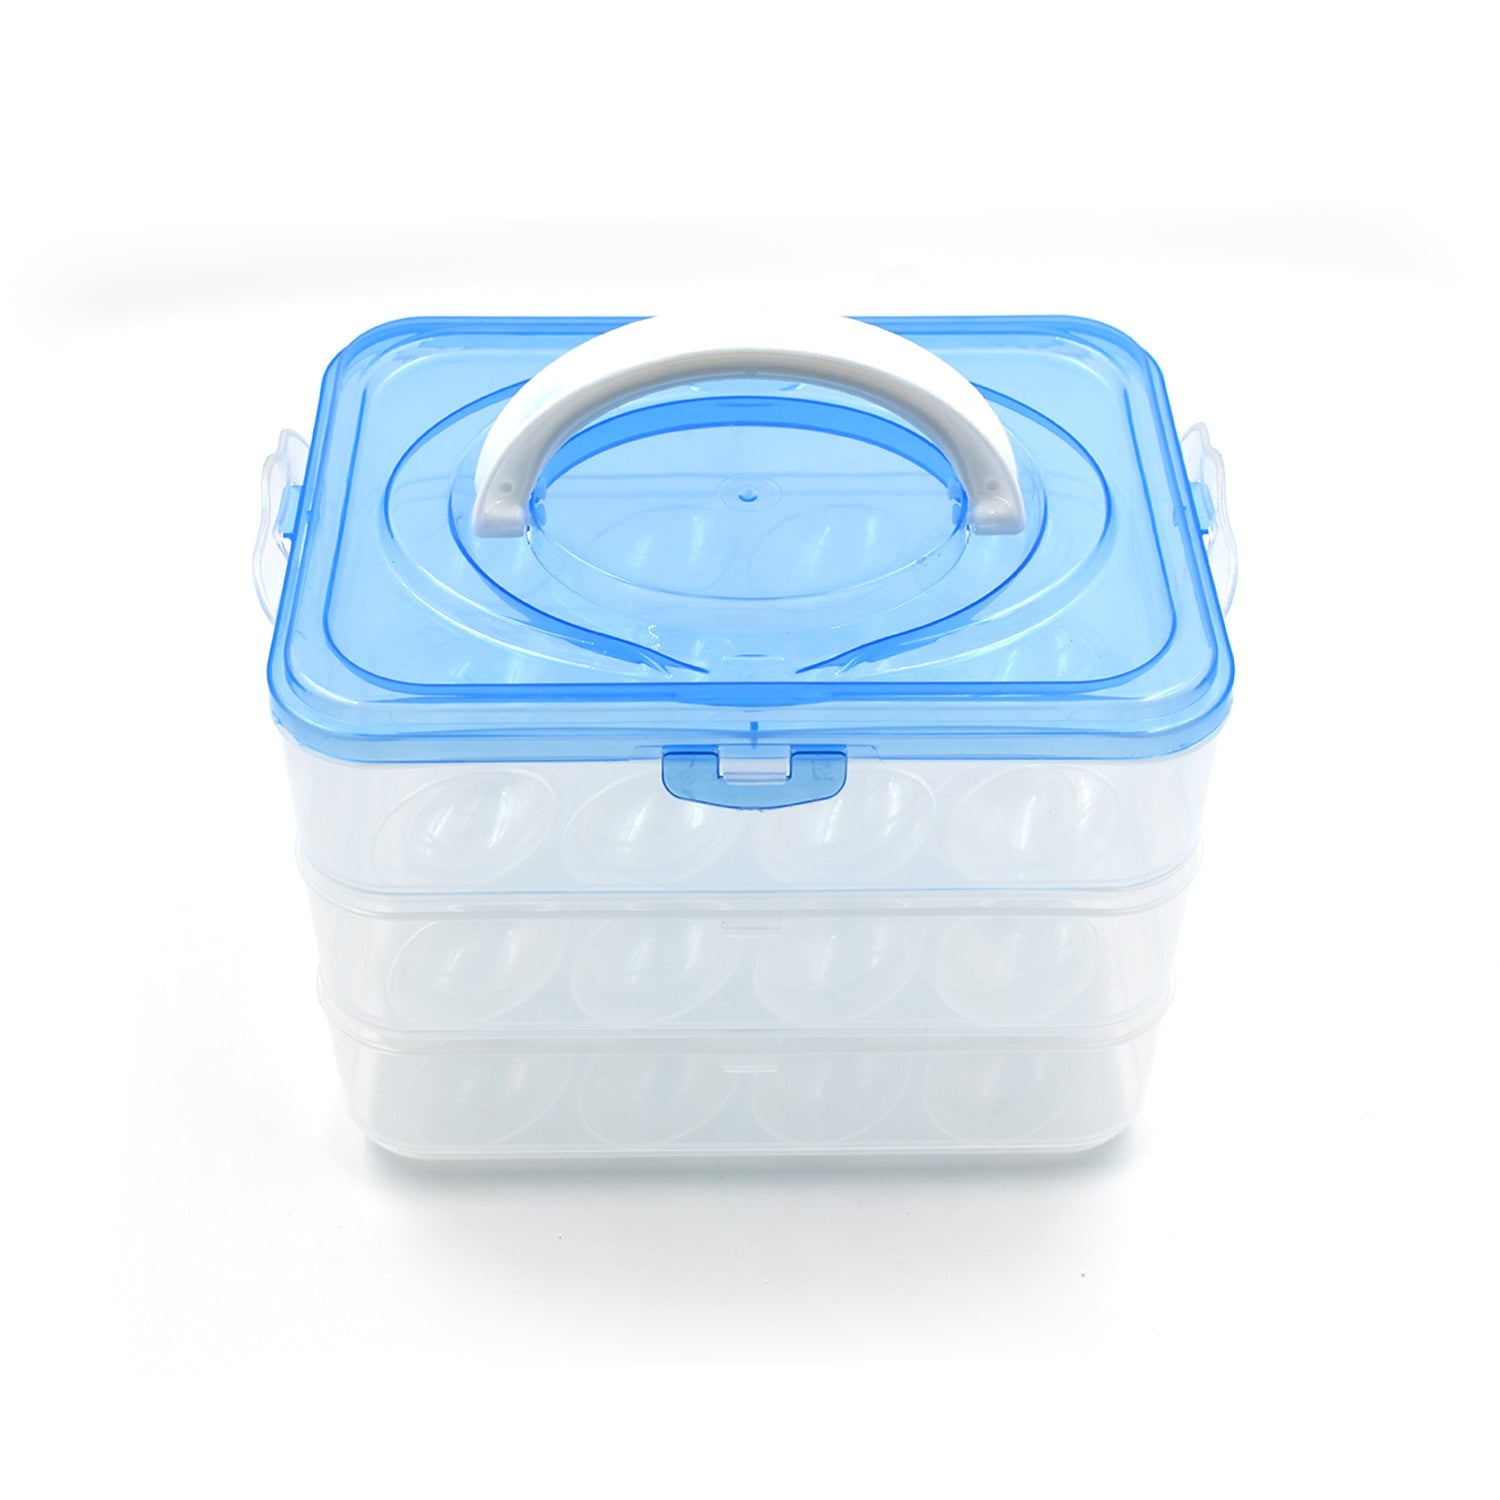 2643 3-Layer Plastic Refrigerator Egg Storage Box (36 Grid) freeshipping - DeoDap